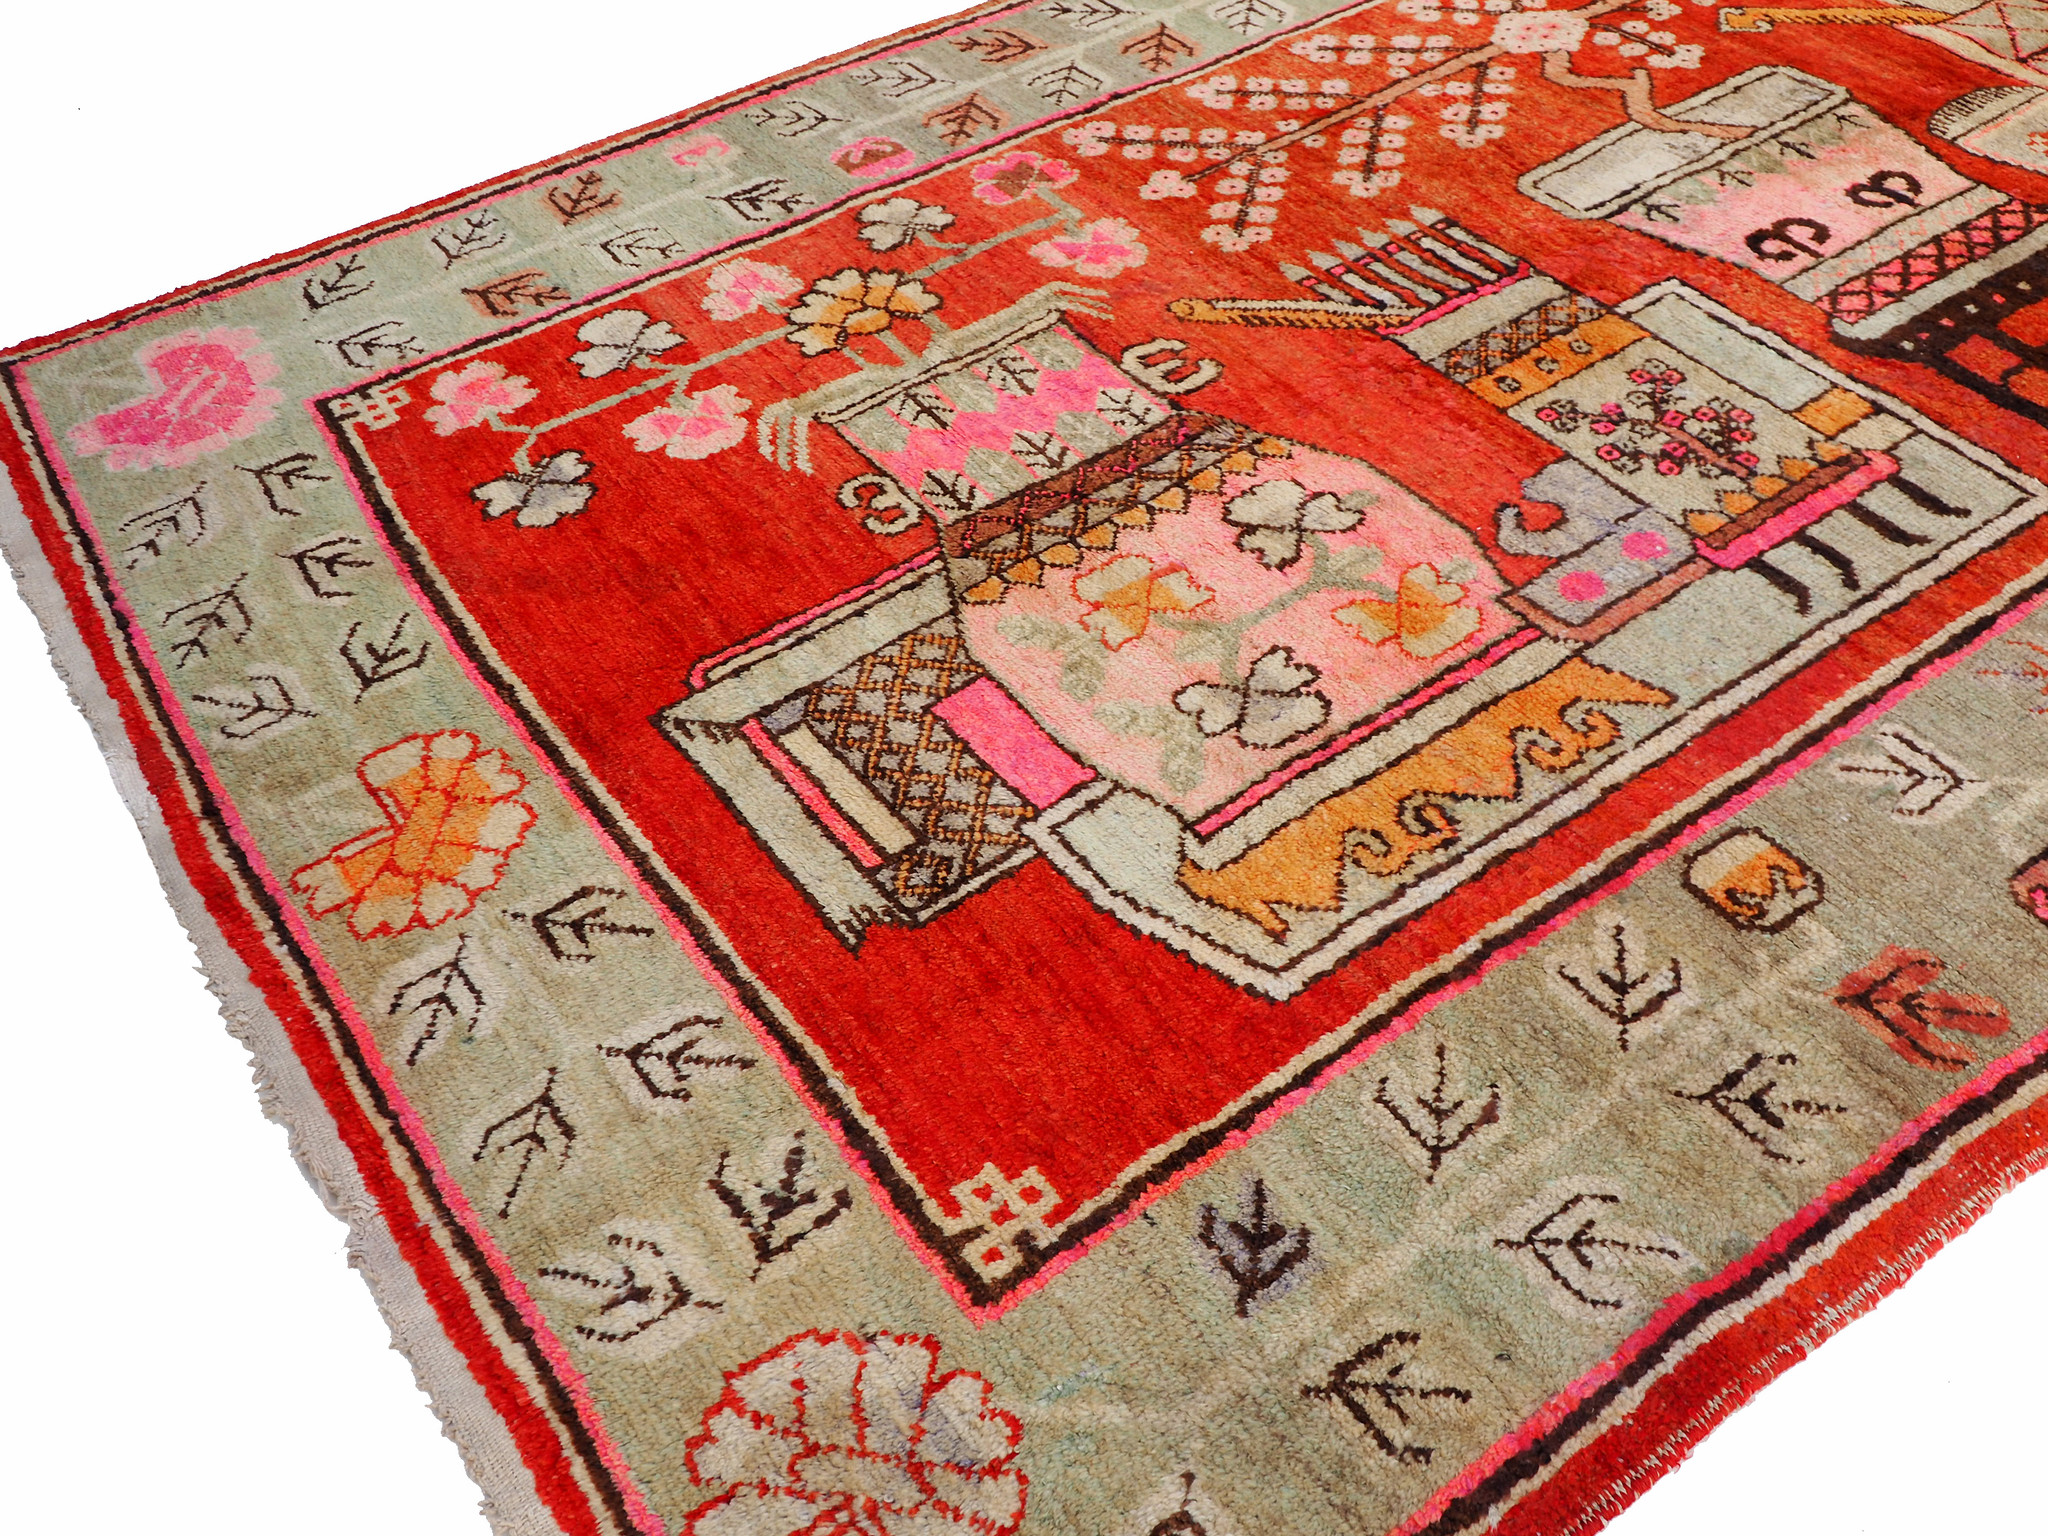 252x146 cm original antique Khotan Samarkand rug Chinese Turkestan hand knotted carpet No:21/41